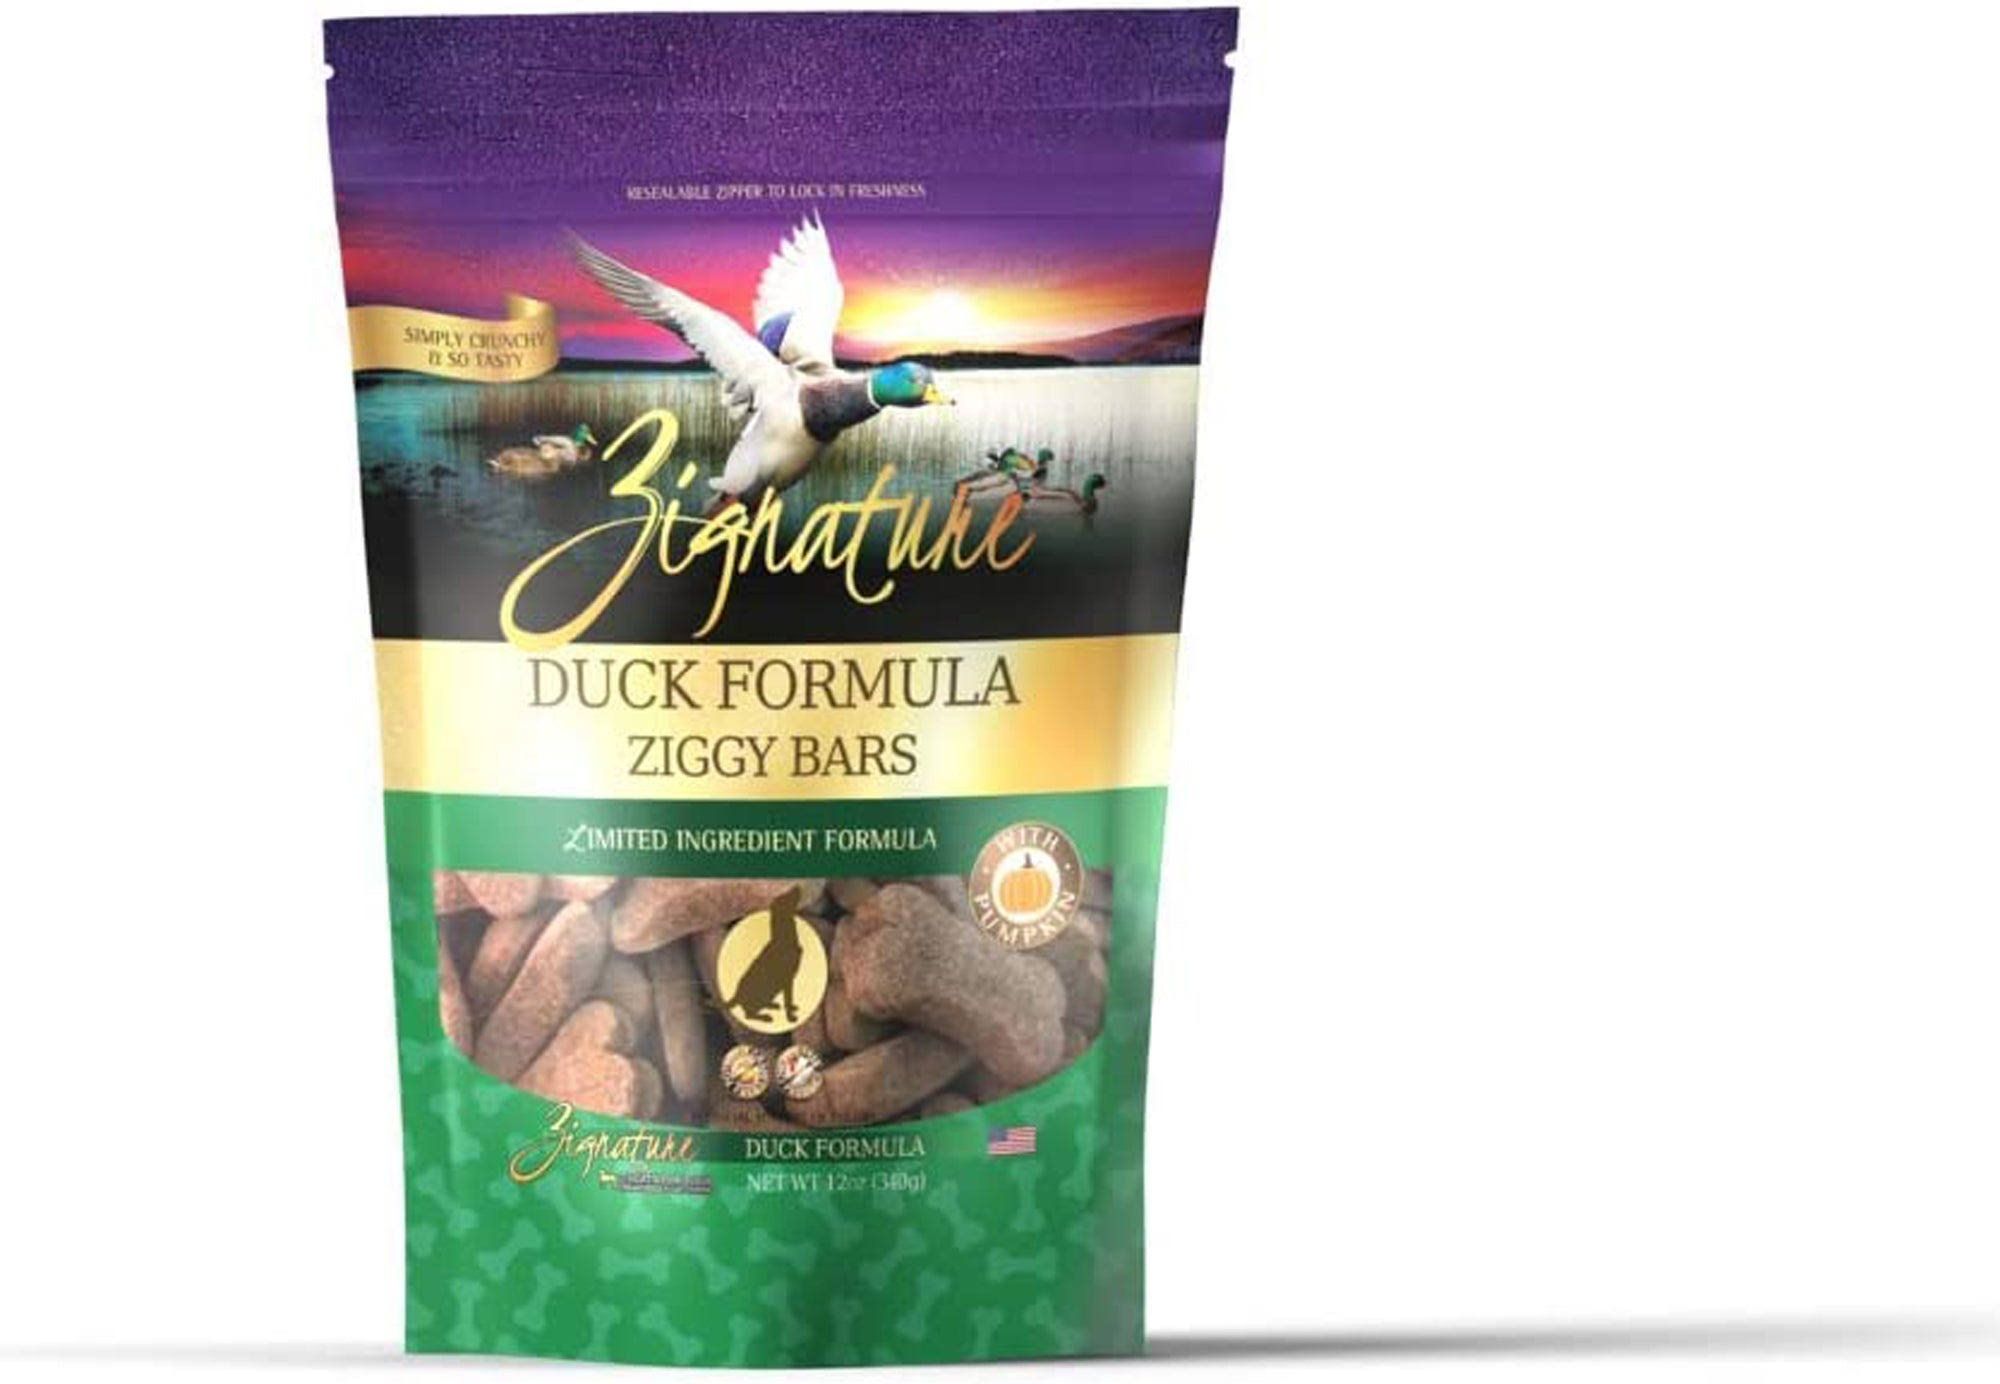 Zignature Limited Ingredient Duck Formula Ziggy Bars 12 oz